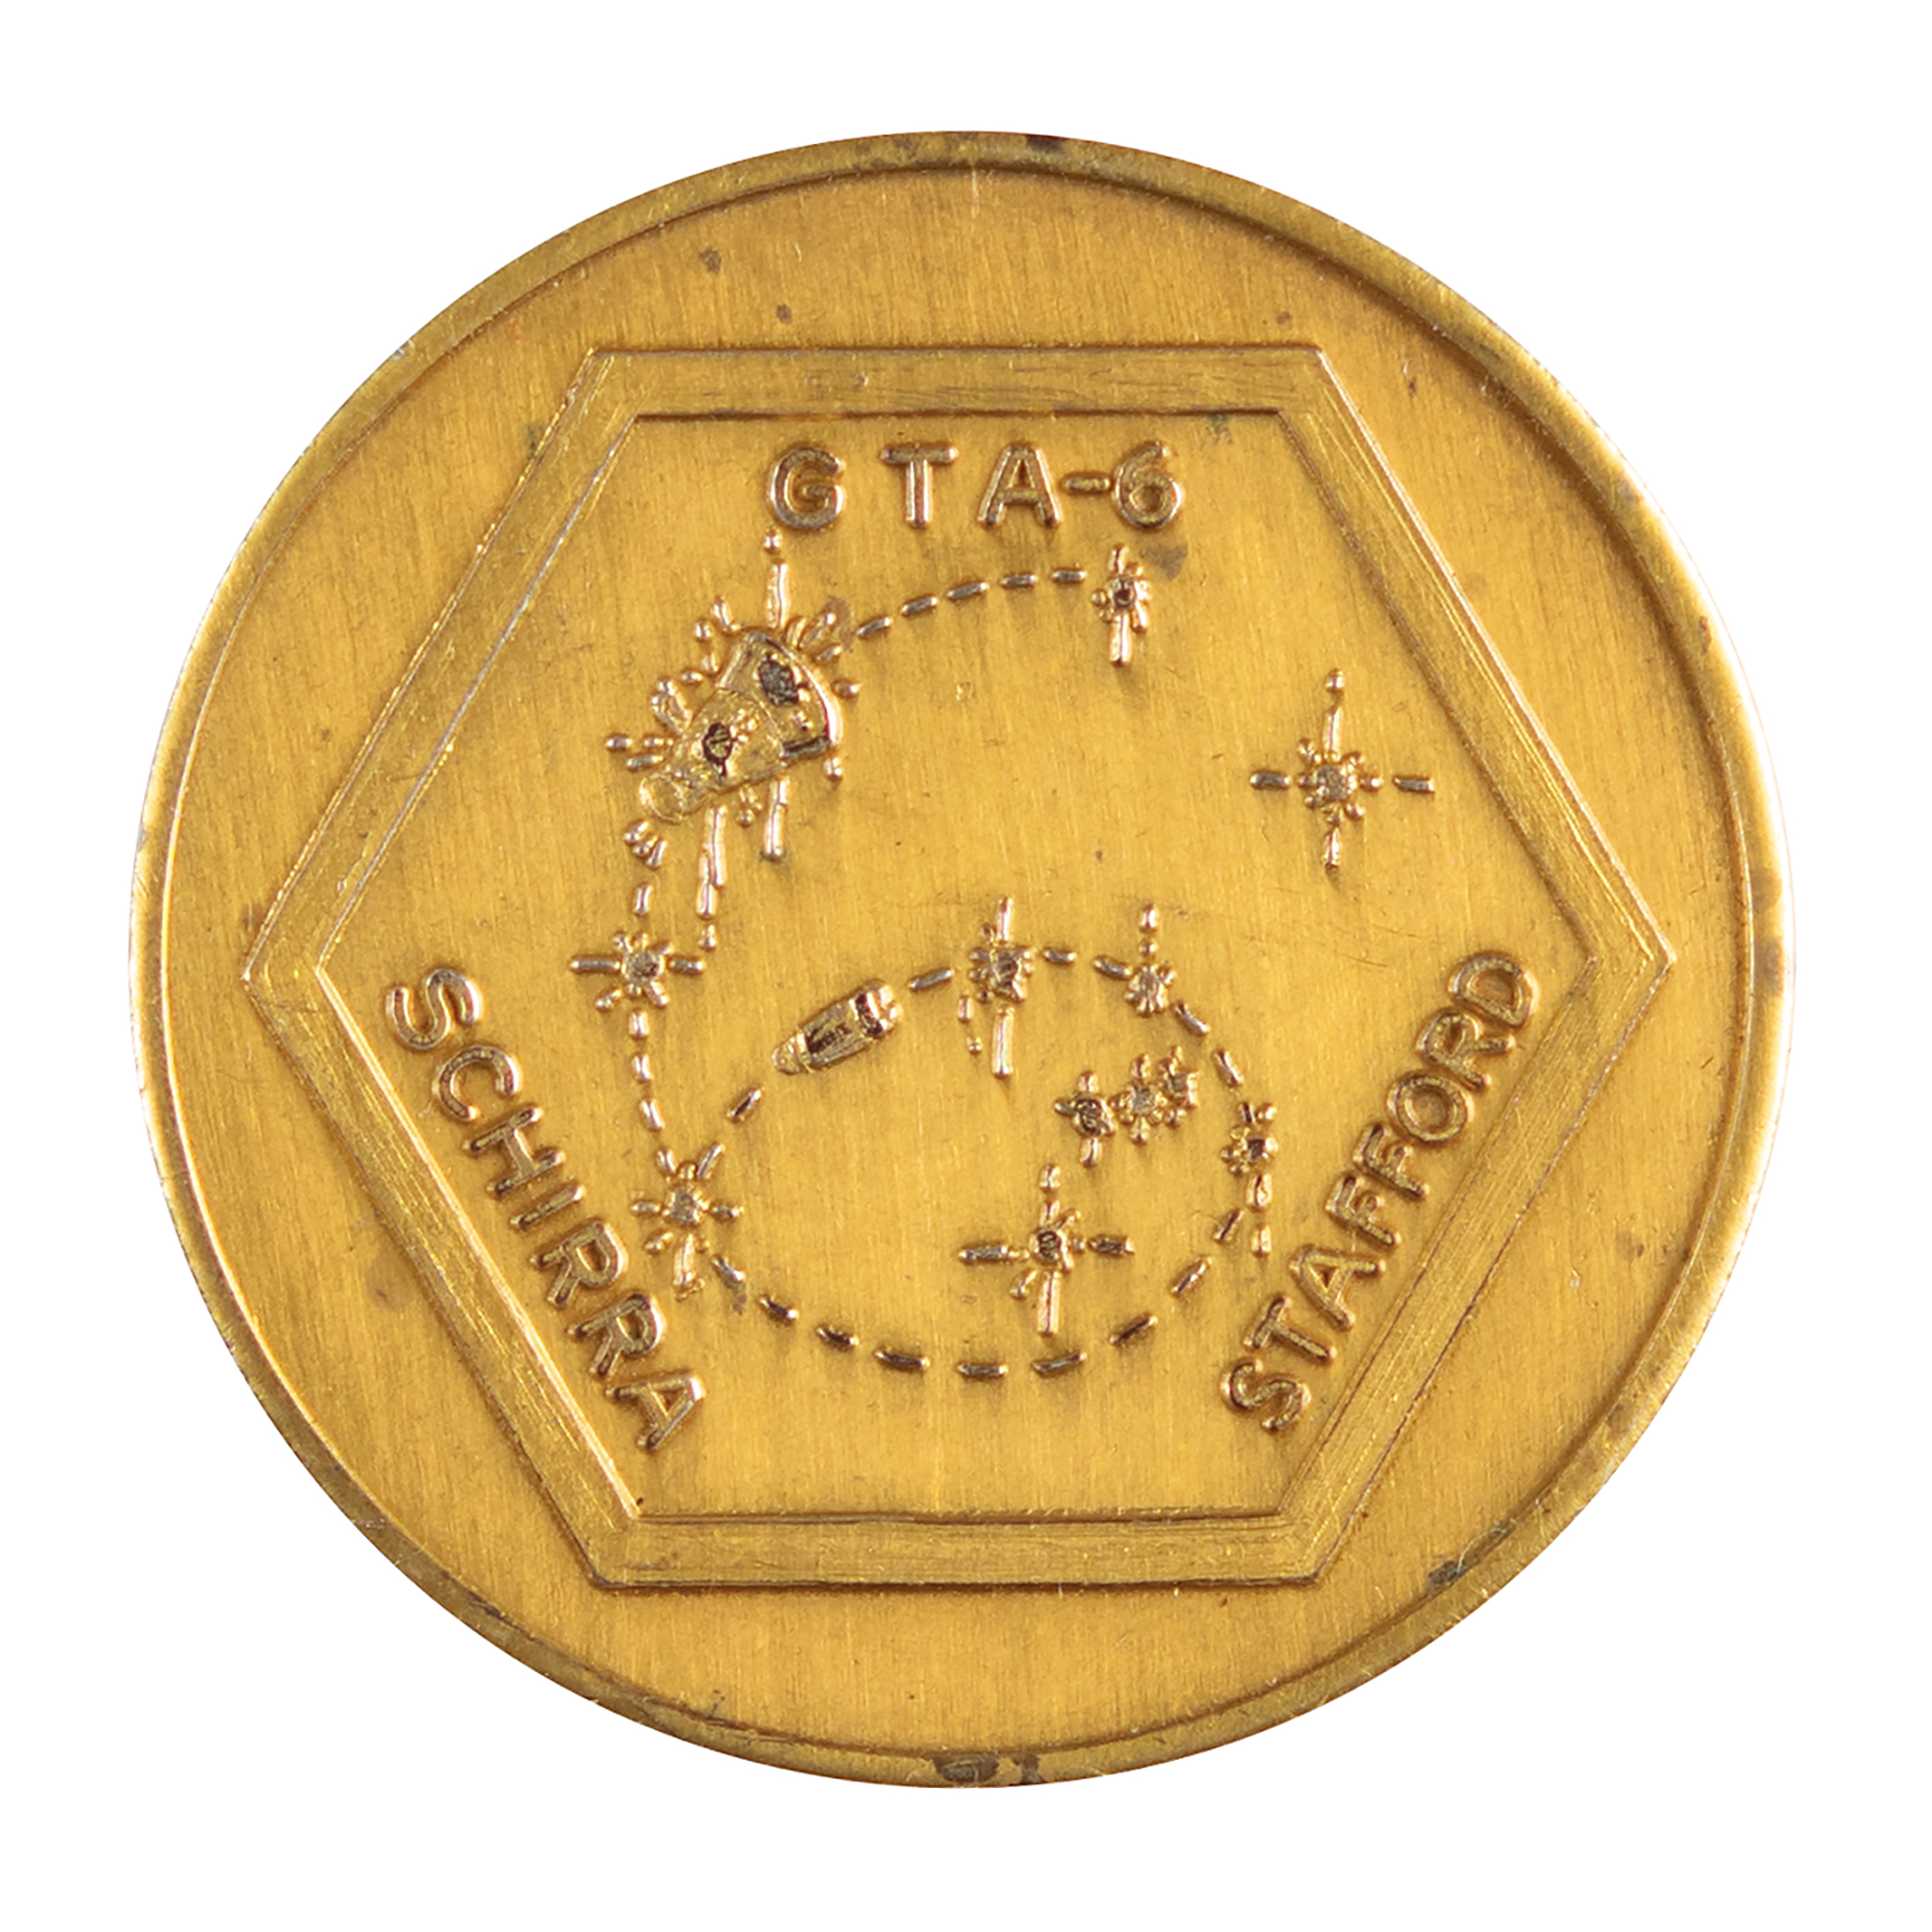 Lot #7083 Wally Schirra's Gemini 6 Flown Gold-Plated Fliteline Medallion